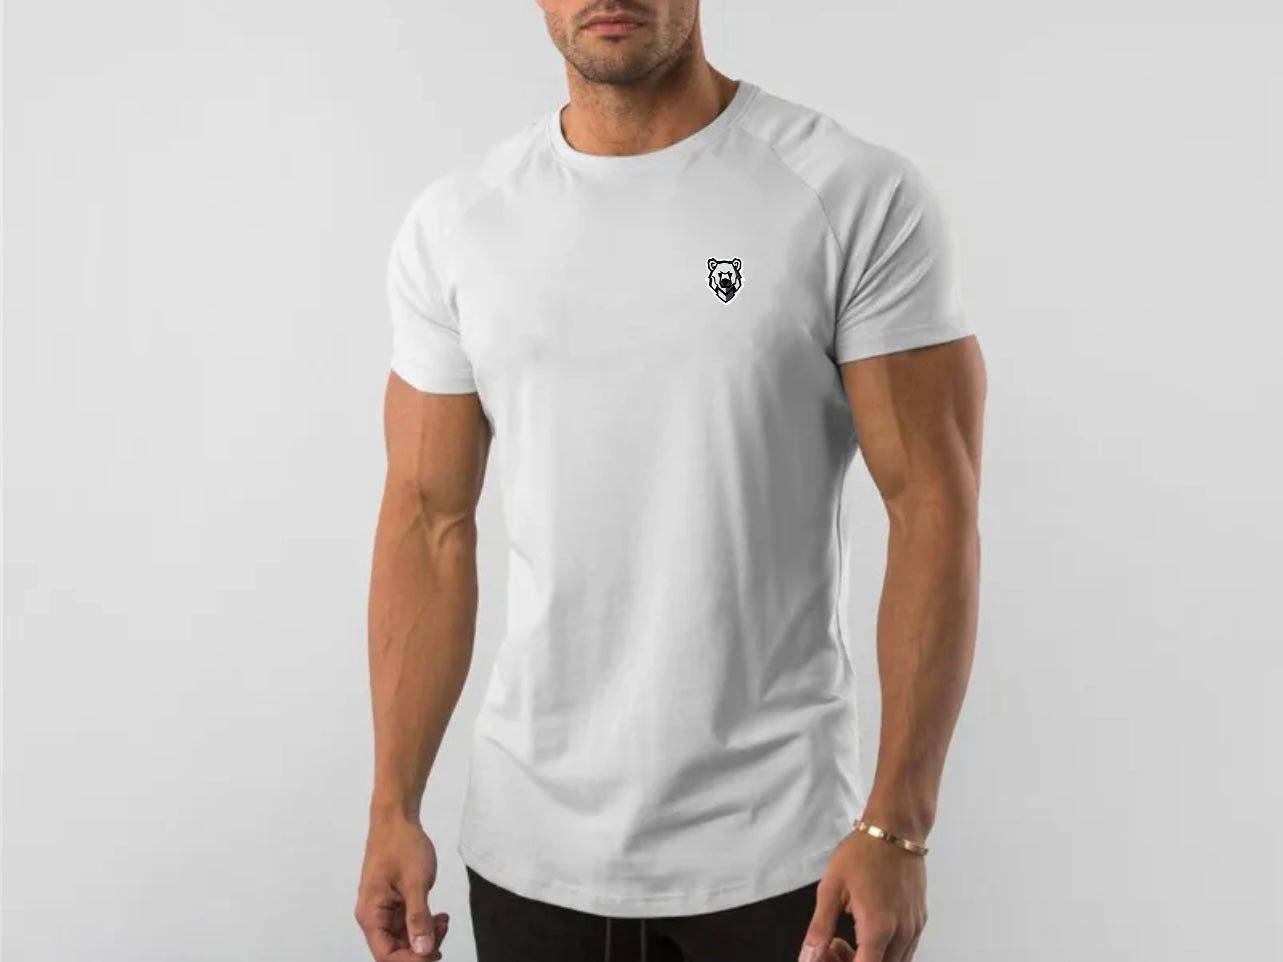 Men's Sports T-Shirts - Athletic Sportswear T-Shirts - Sigma Fit